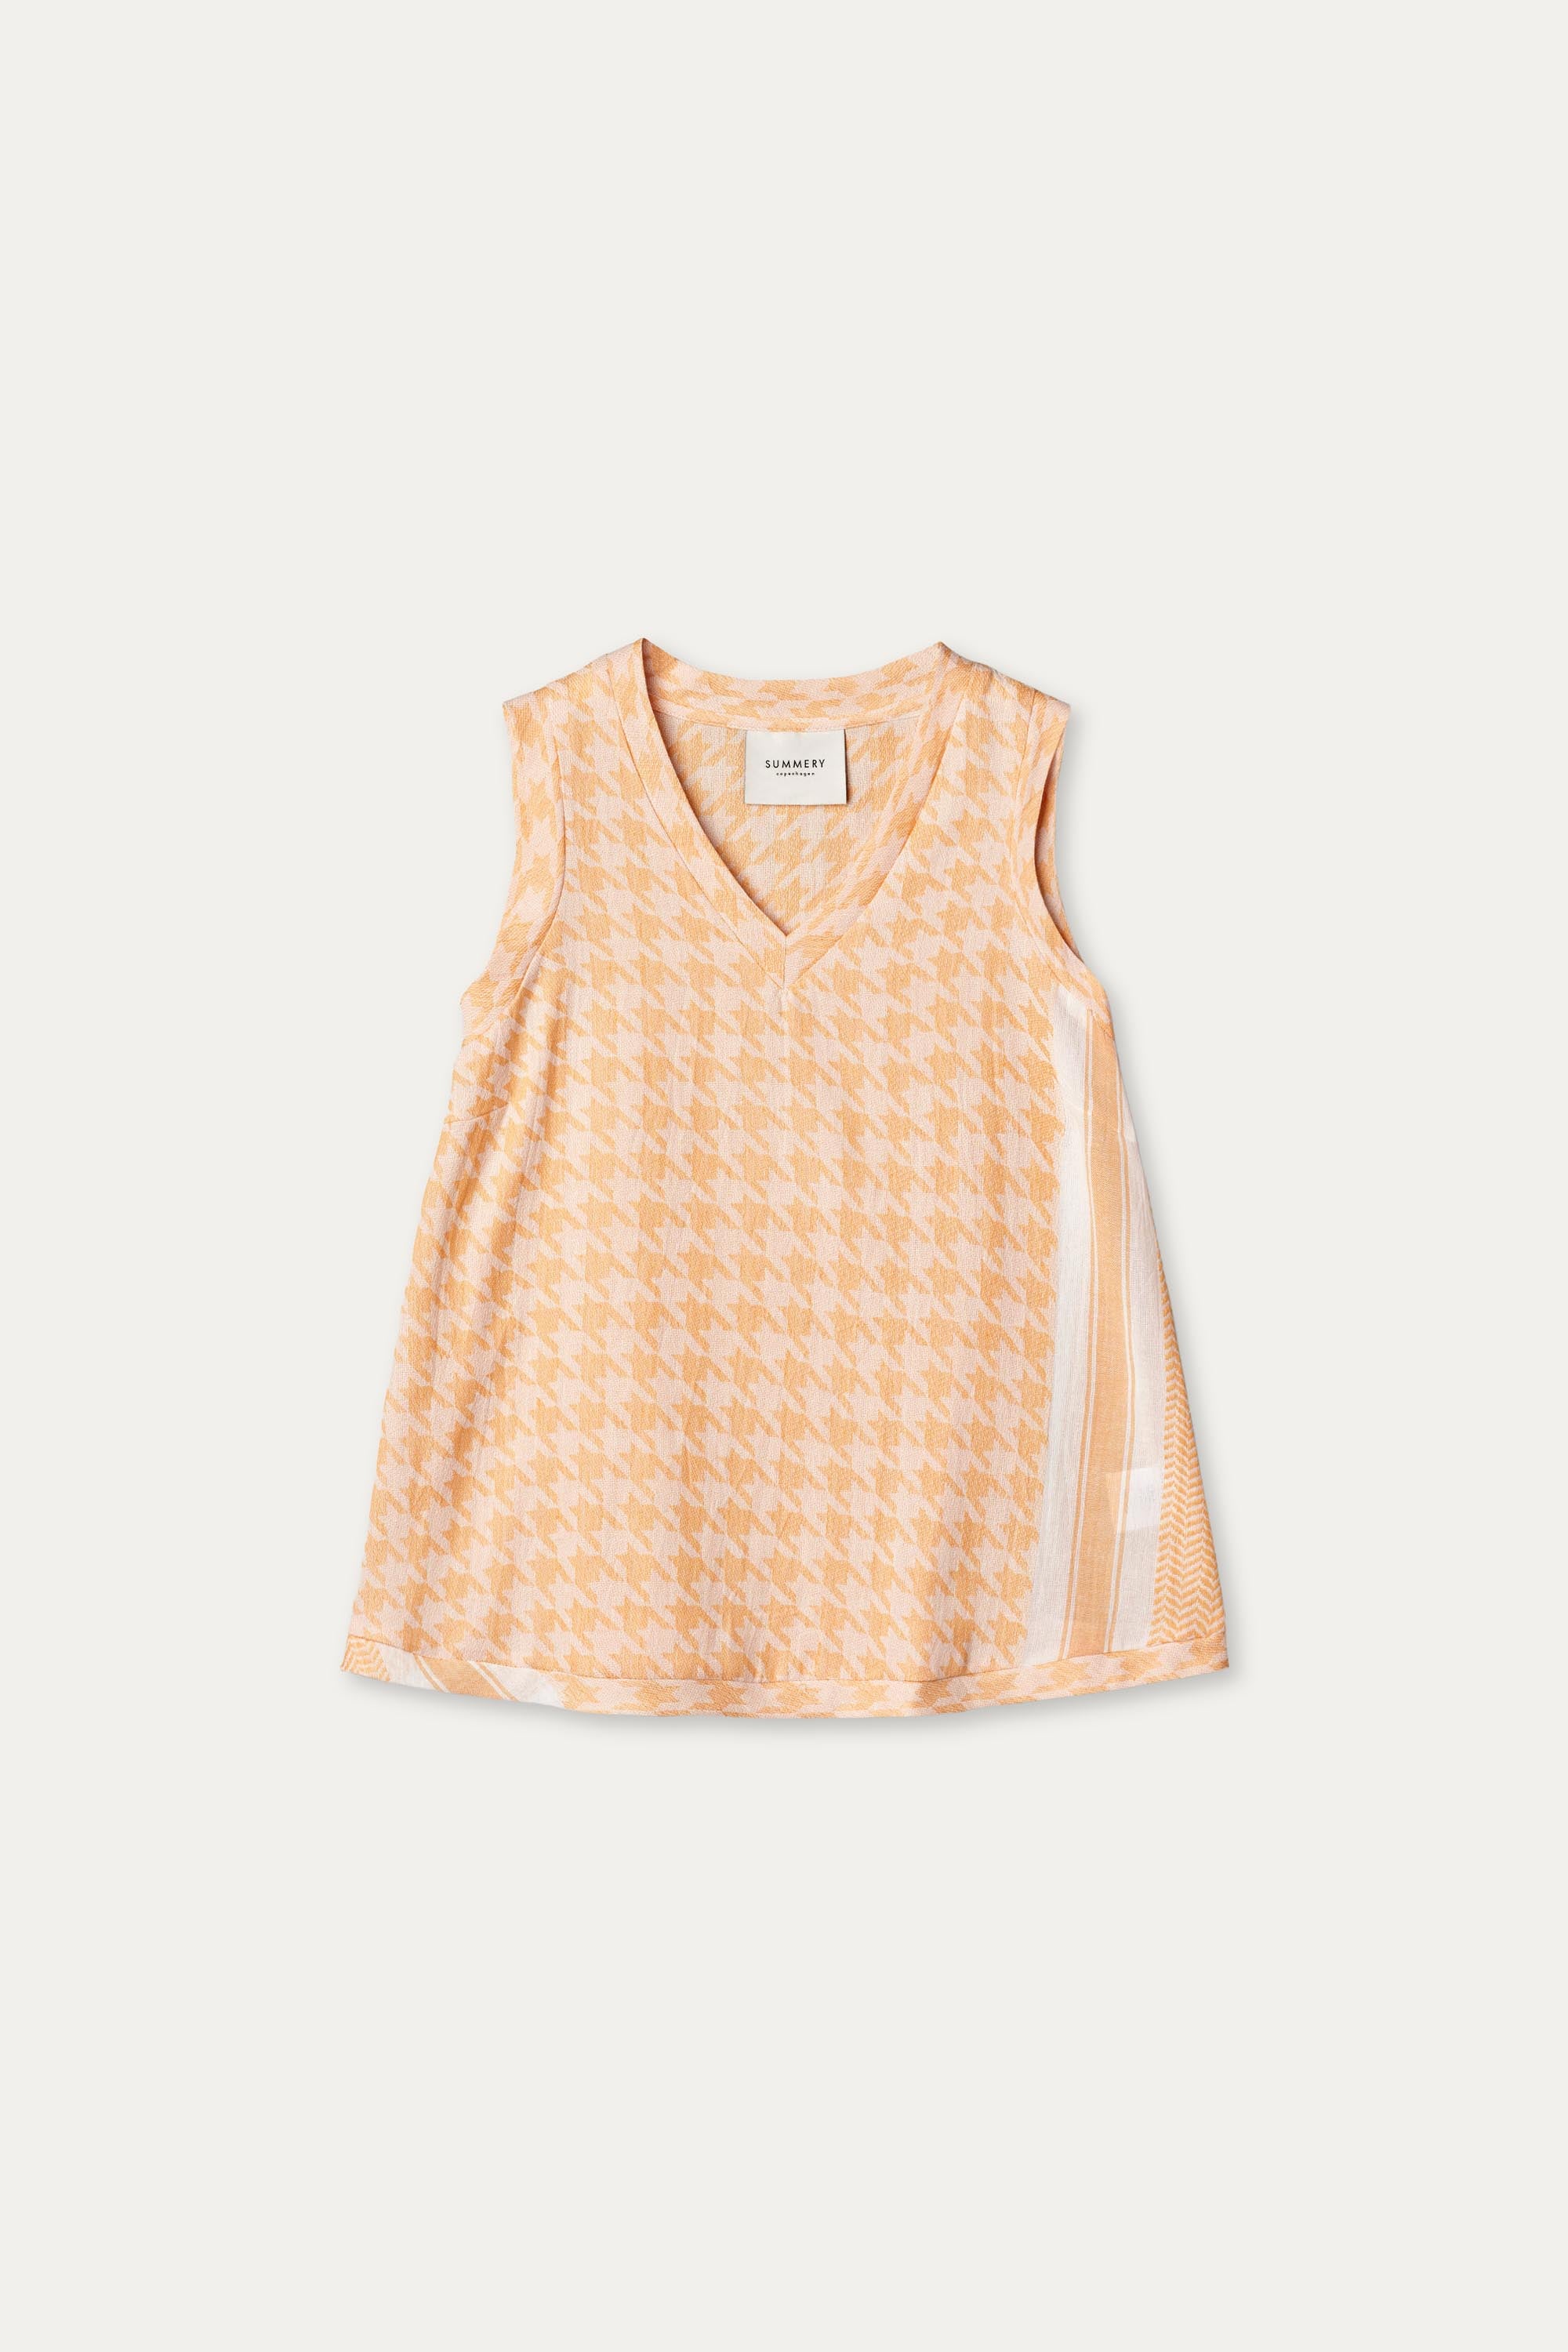 SUMMERY Copenhagen Shirt V No Sleeves Top 514 Warm Apricot